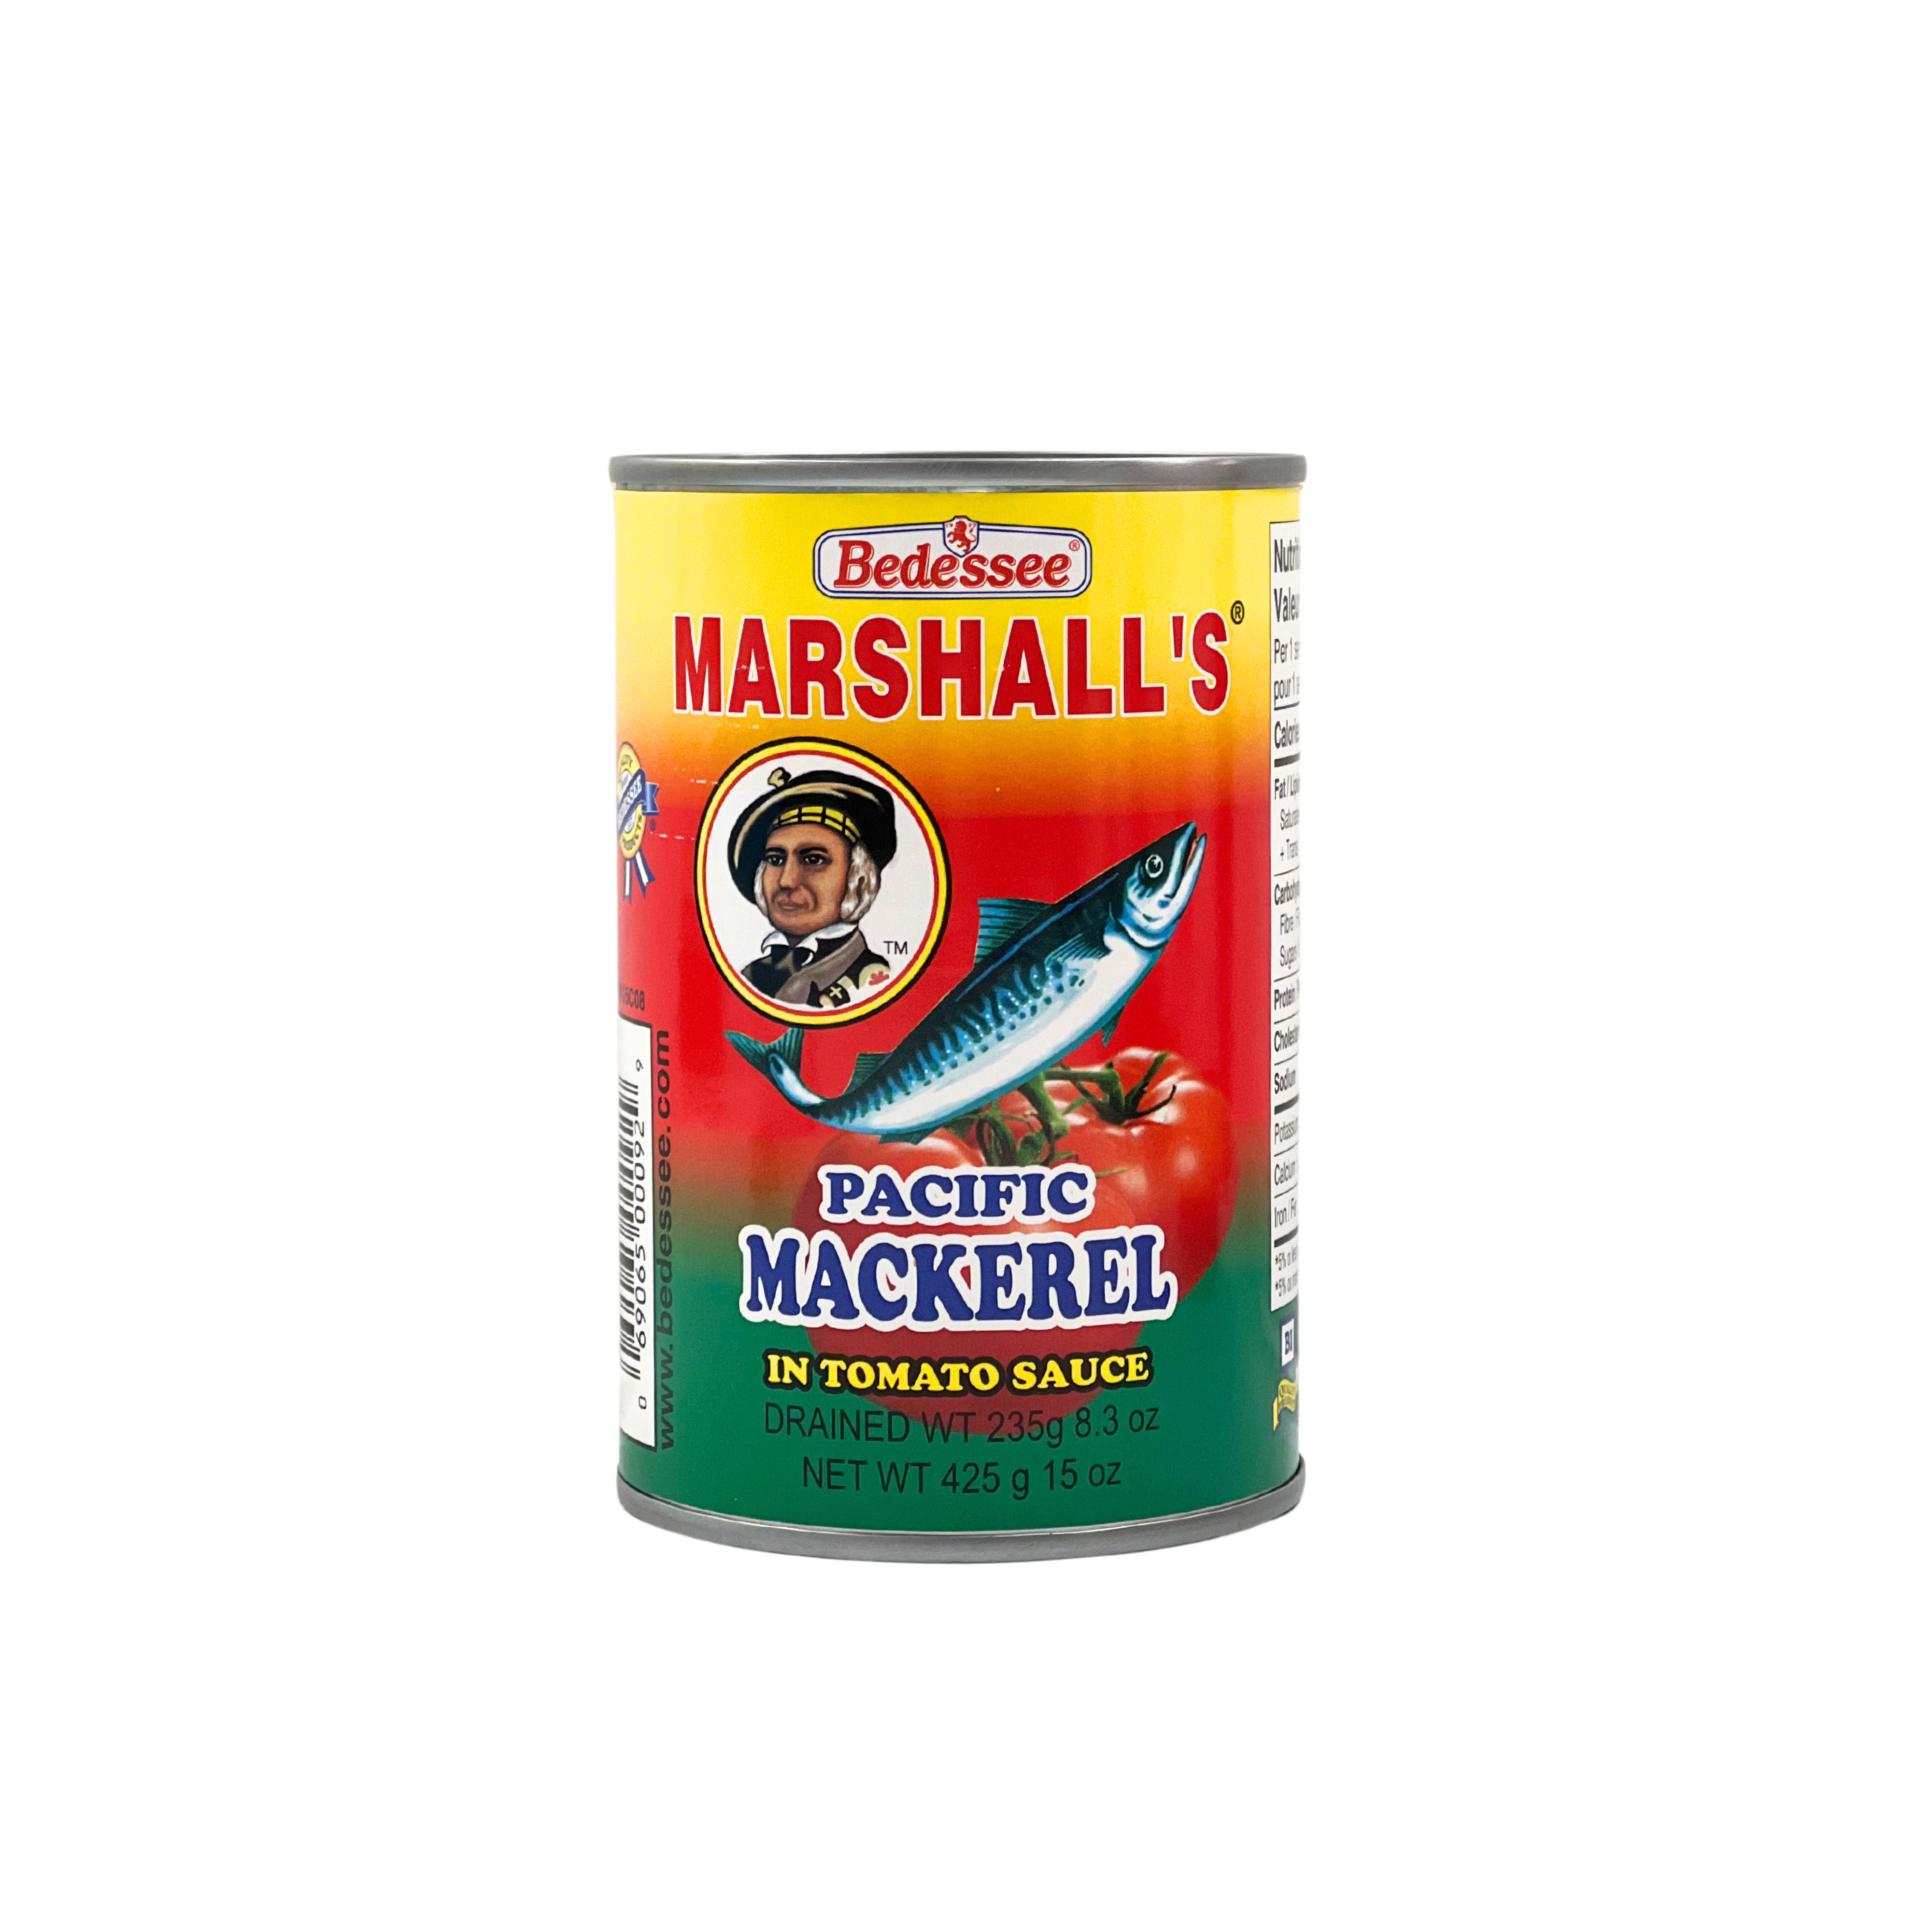 Marshall's Mackerel In Tomato Sauce 425g